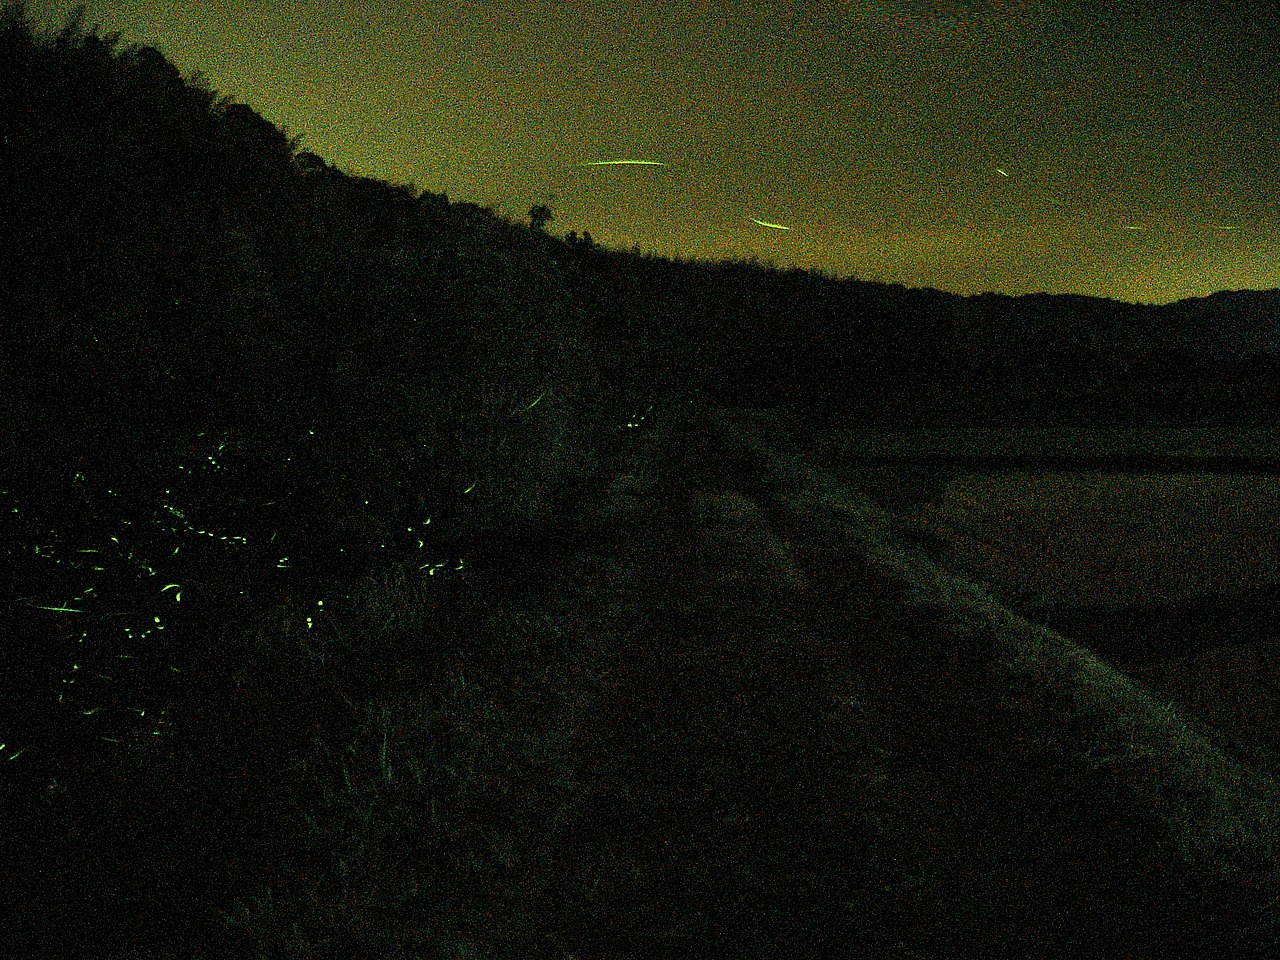 File Luciola Cruciata And Road At Night ゲンジボタルと夜道 Panoramio Jpg Wikimedia Commons